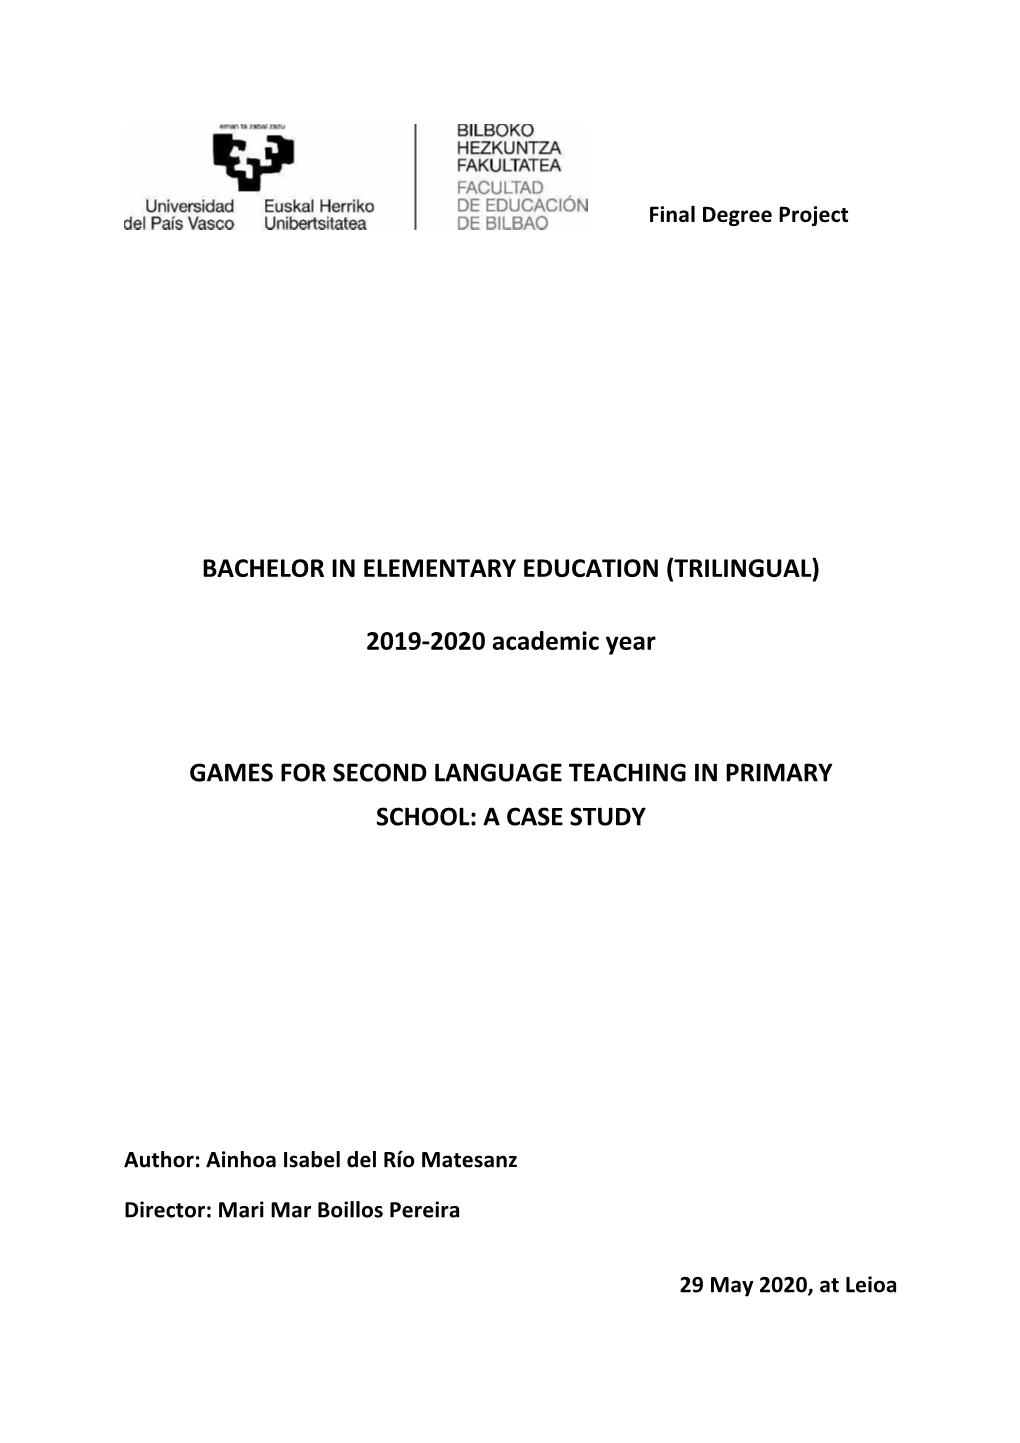 Bachelor in Elementary Education (Trilingual)